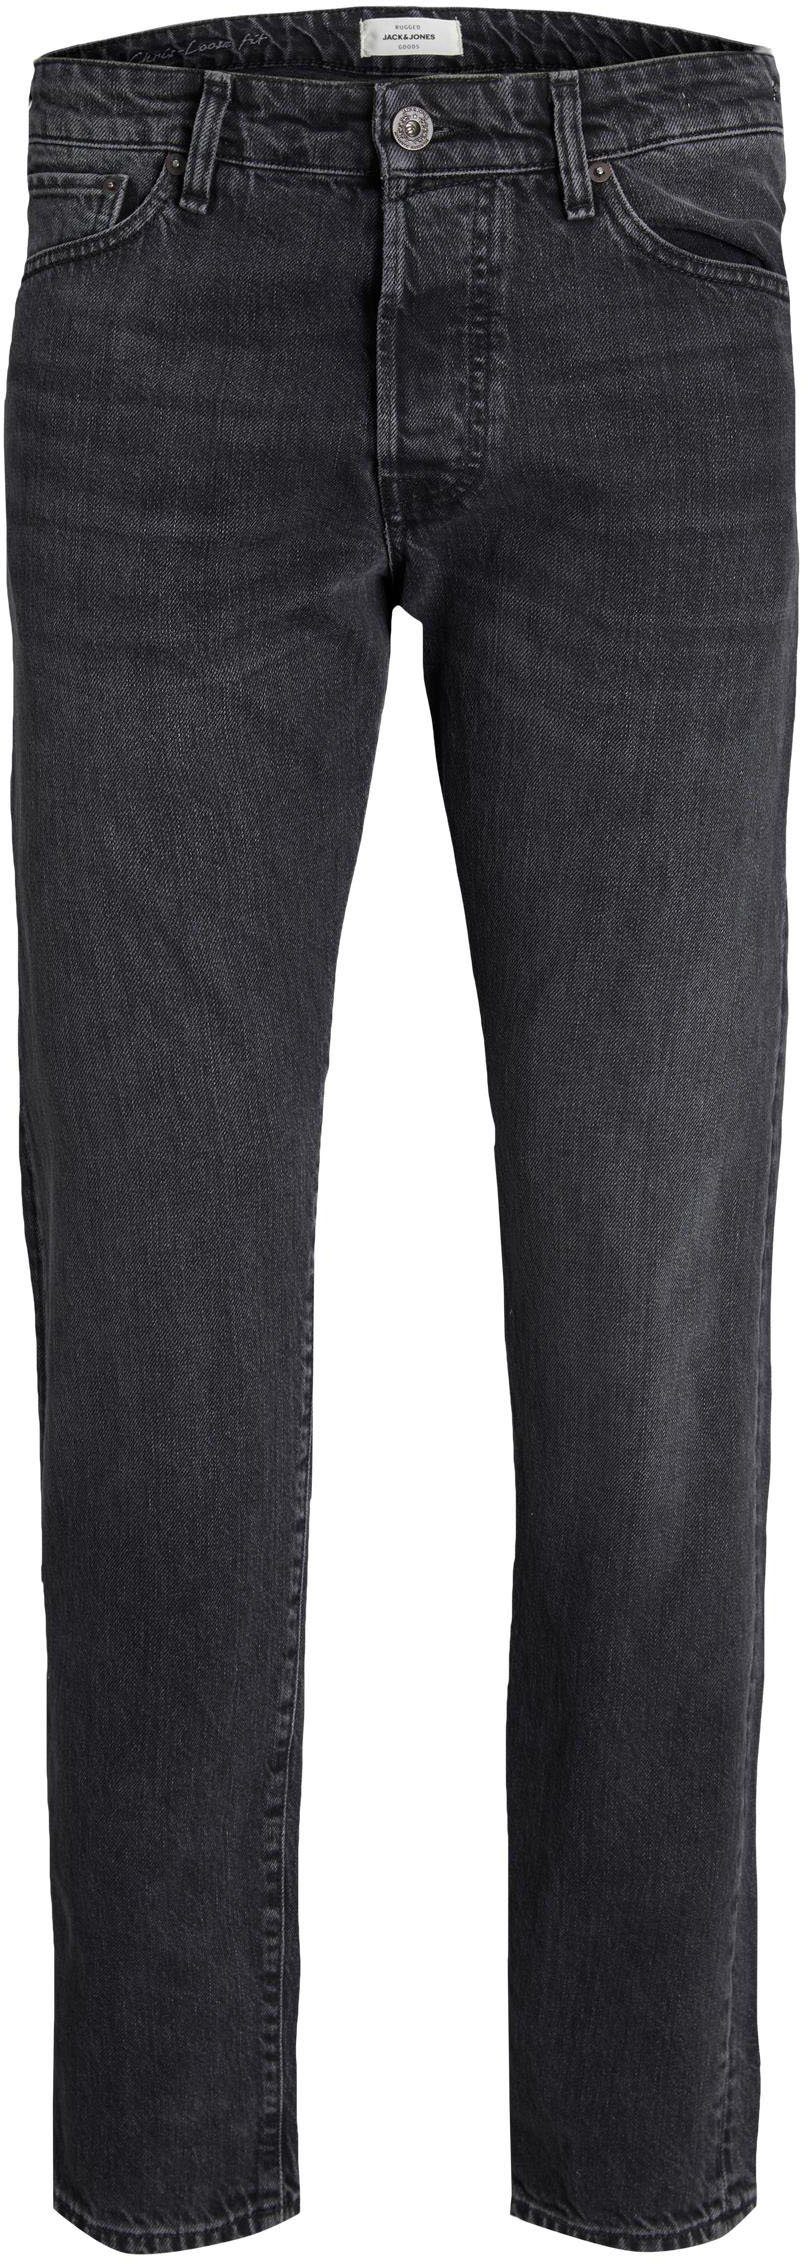 Jack & Jones Loose-fit-Jeans CHRIS denim COOPER black